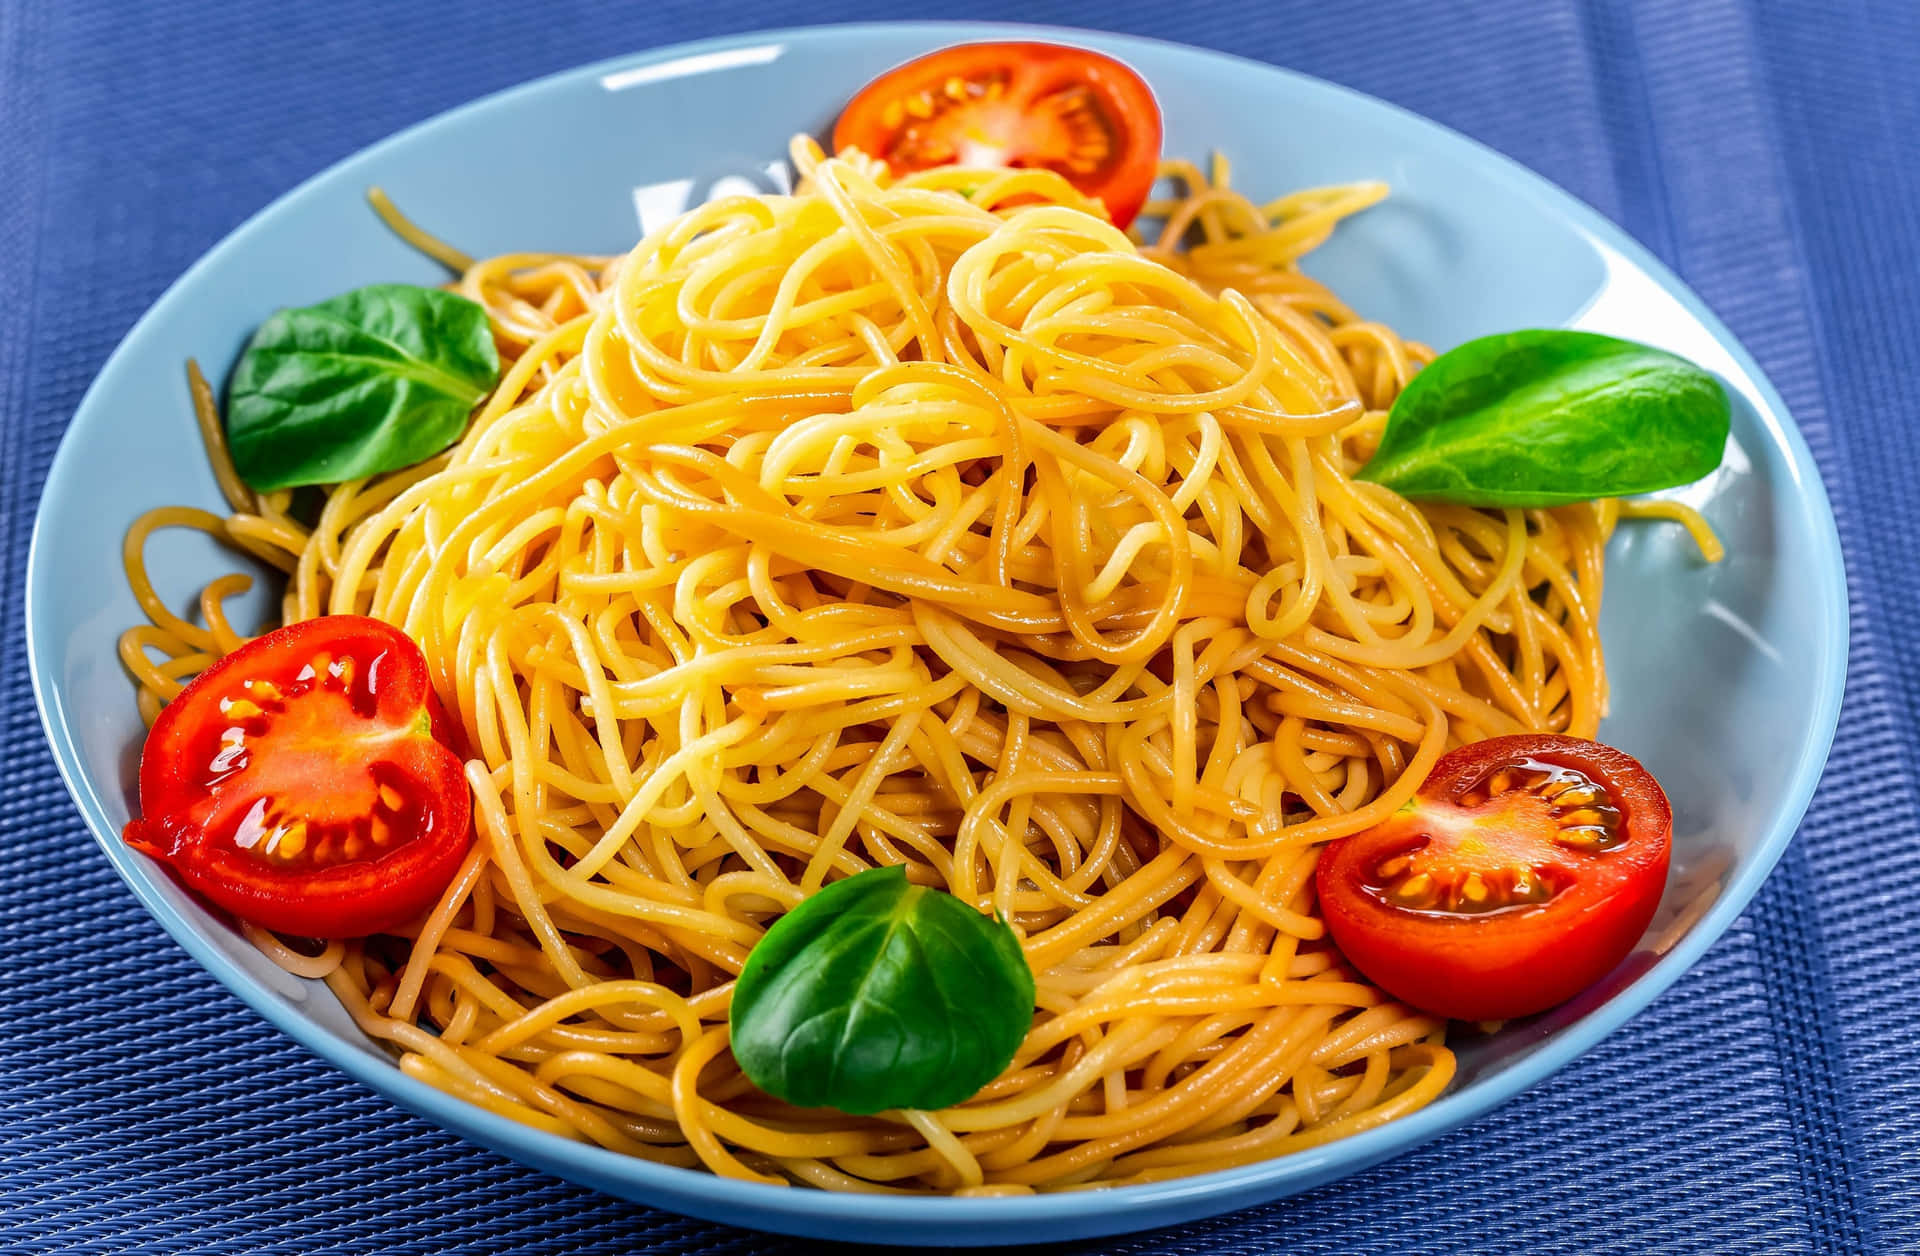 Spaghettipastanudlarmed Tomater. Wallpaper